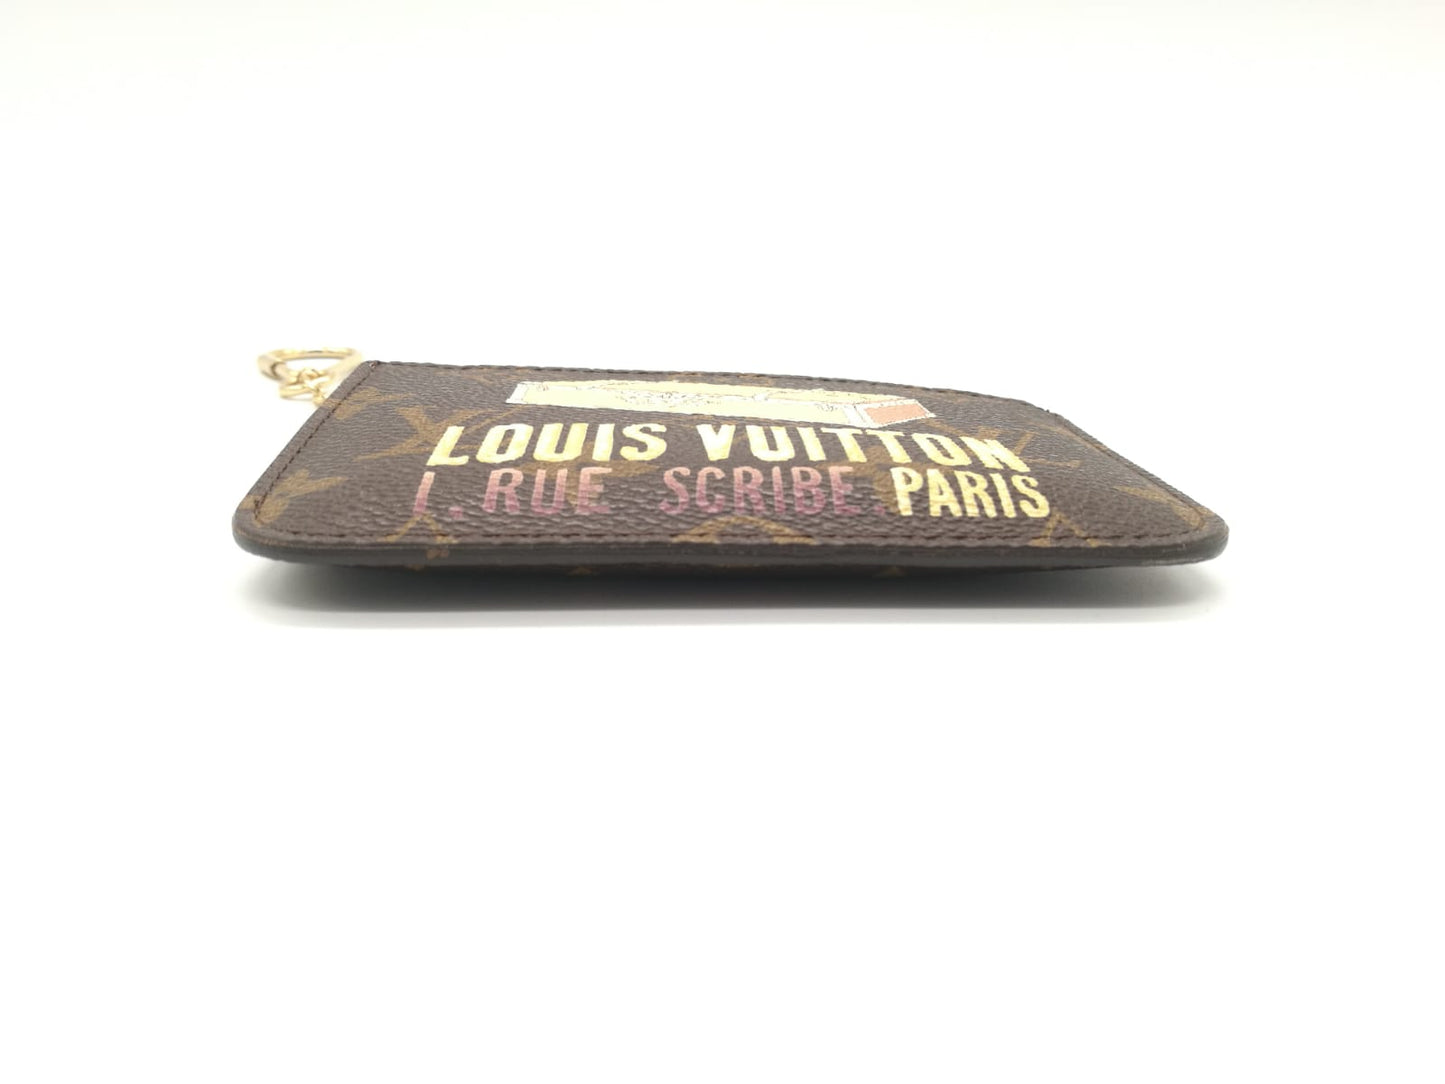 Louis Vuitton Trunk mini pochette limited edition